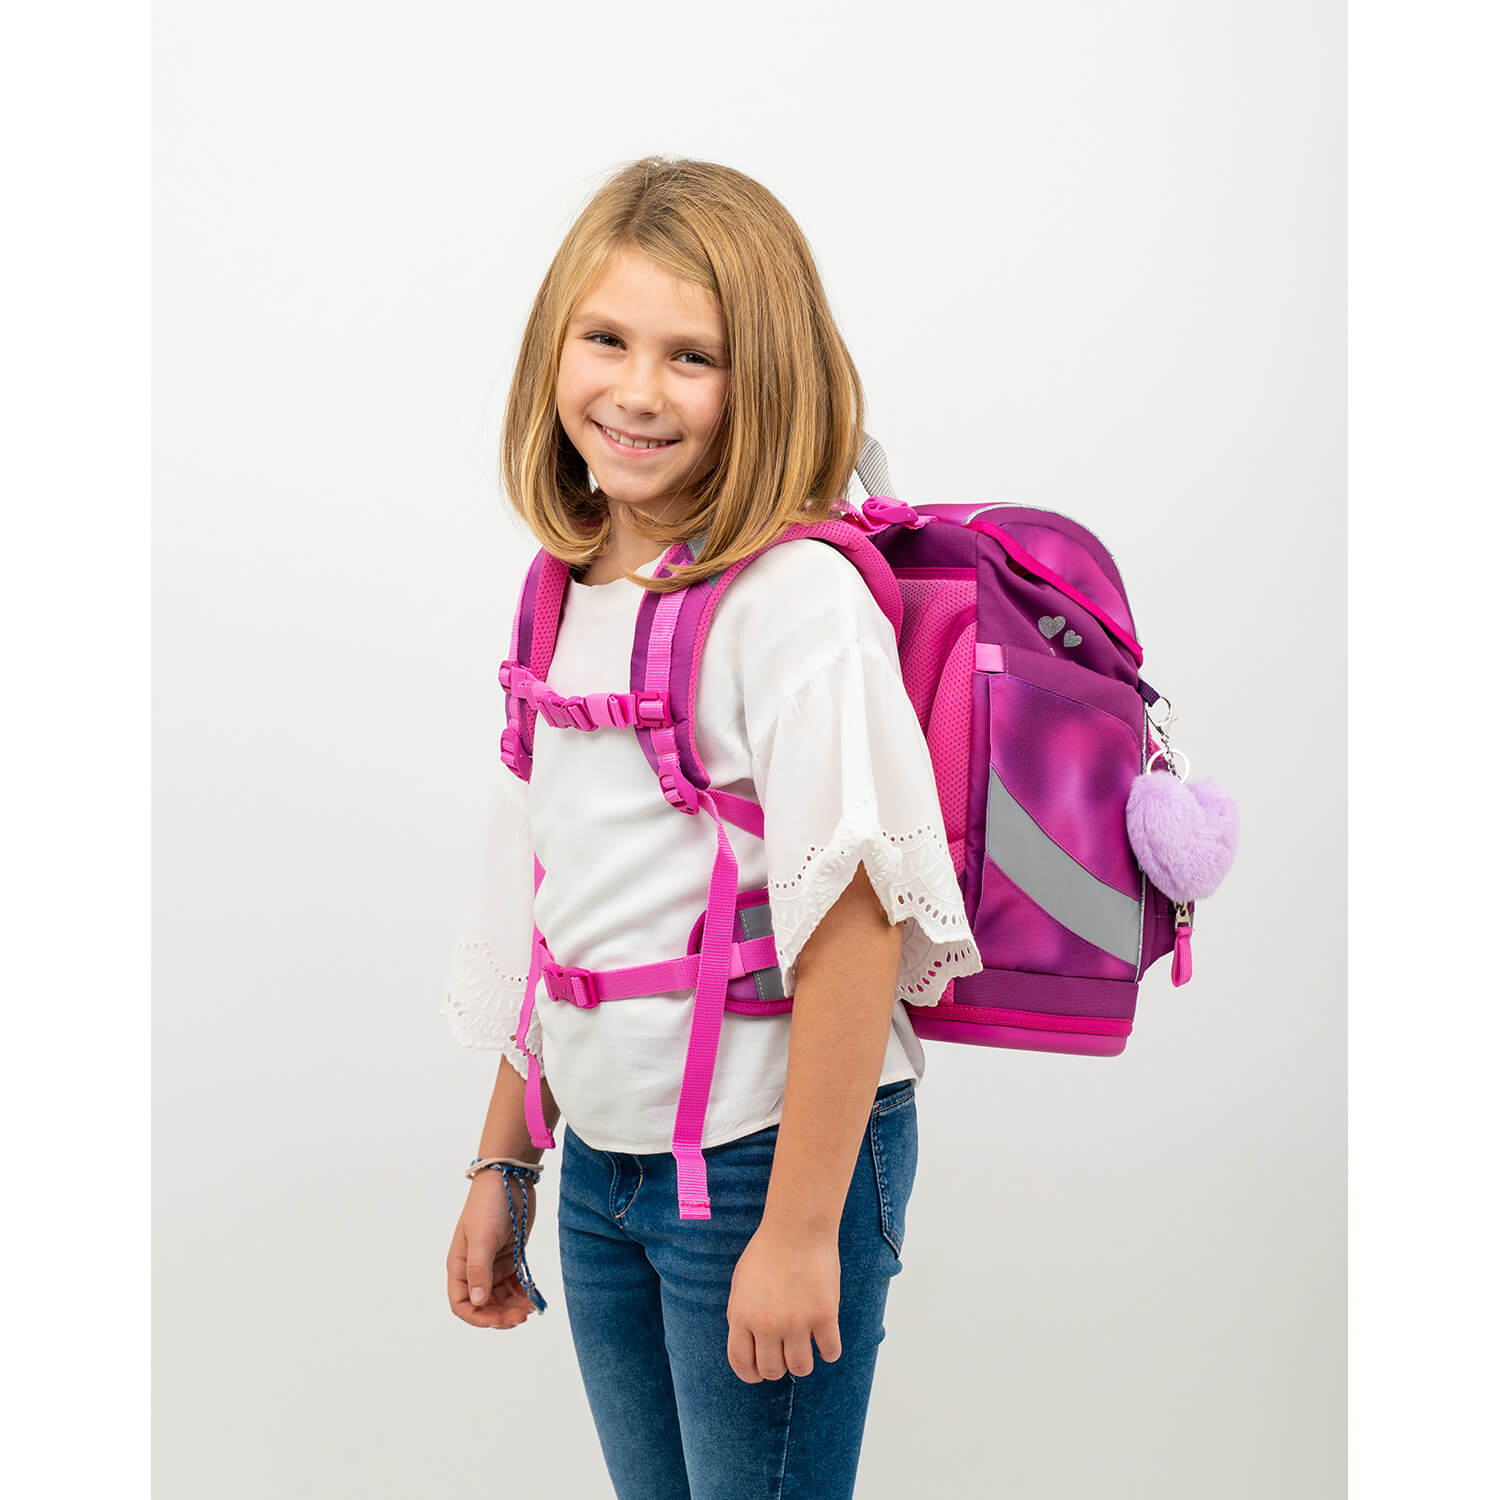 Smarty Shiny Pink schoolbag set 5 pcs